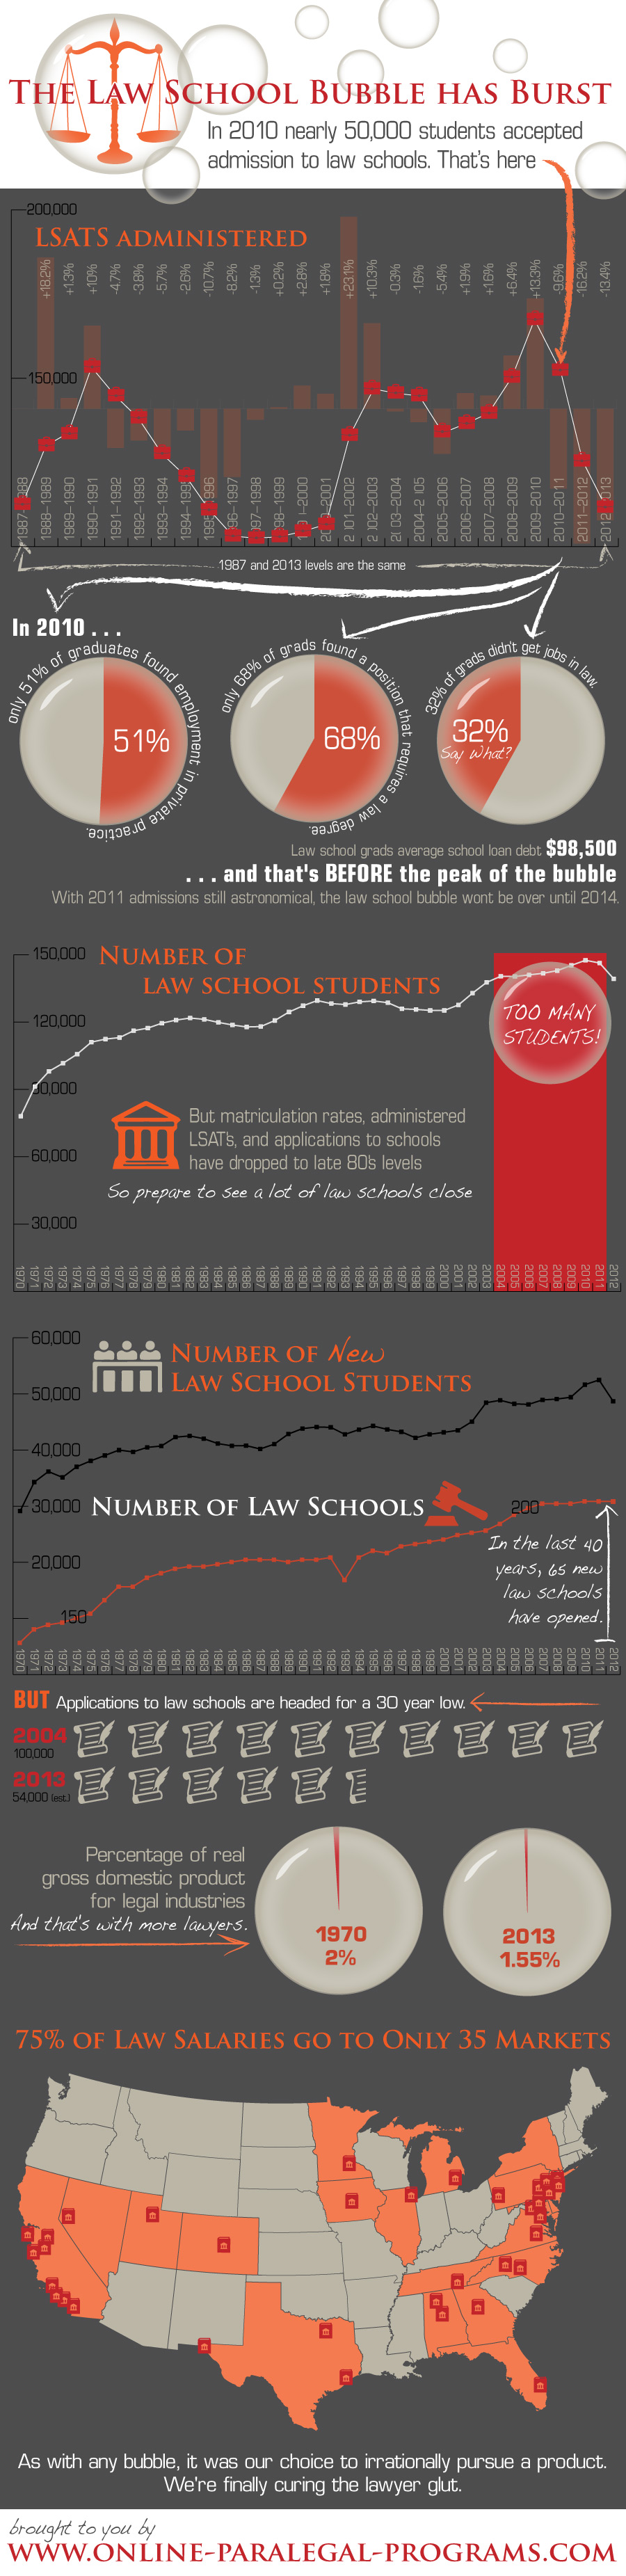 The Law School Bubble Has Burst